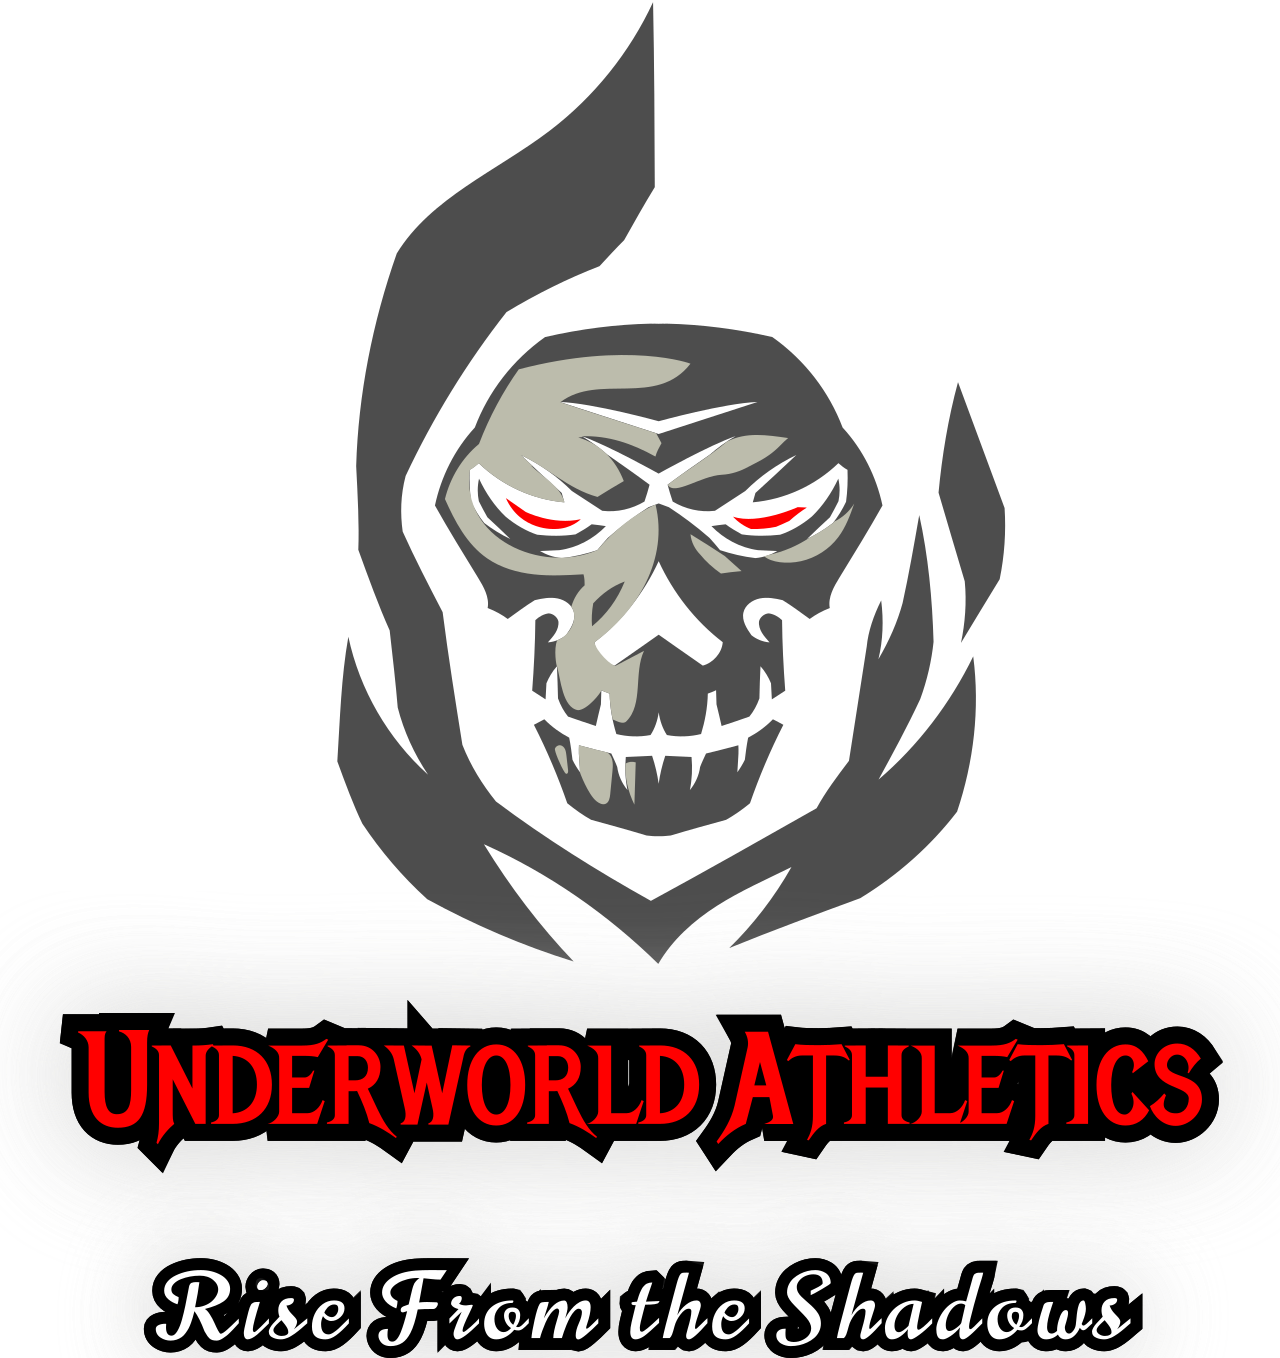 Underworld Athletics's logo